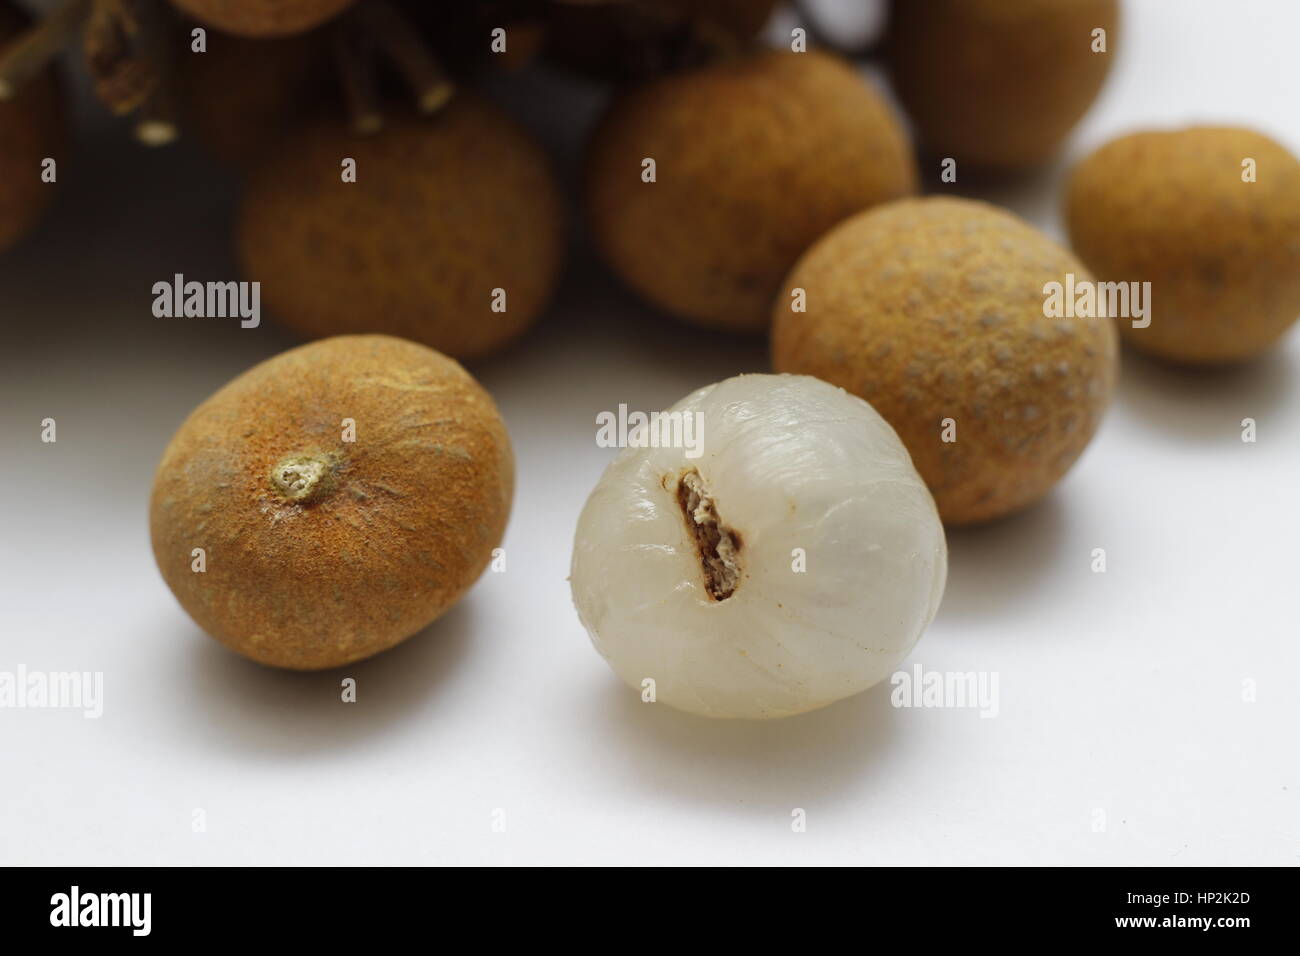 longan fruit, peeled to reveal the white flesh inside. Dimocarpus longan. Stock Photo